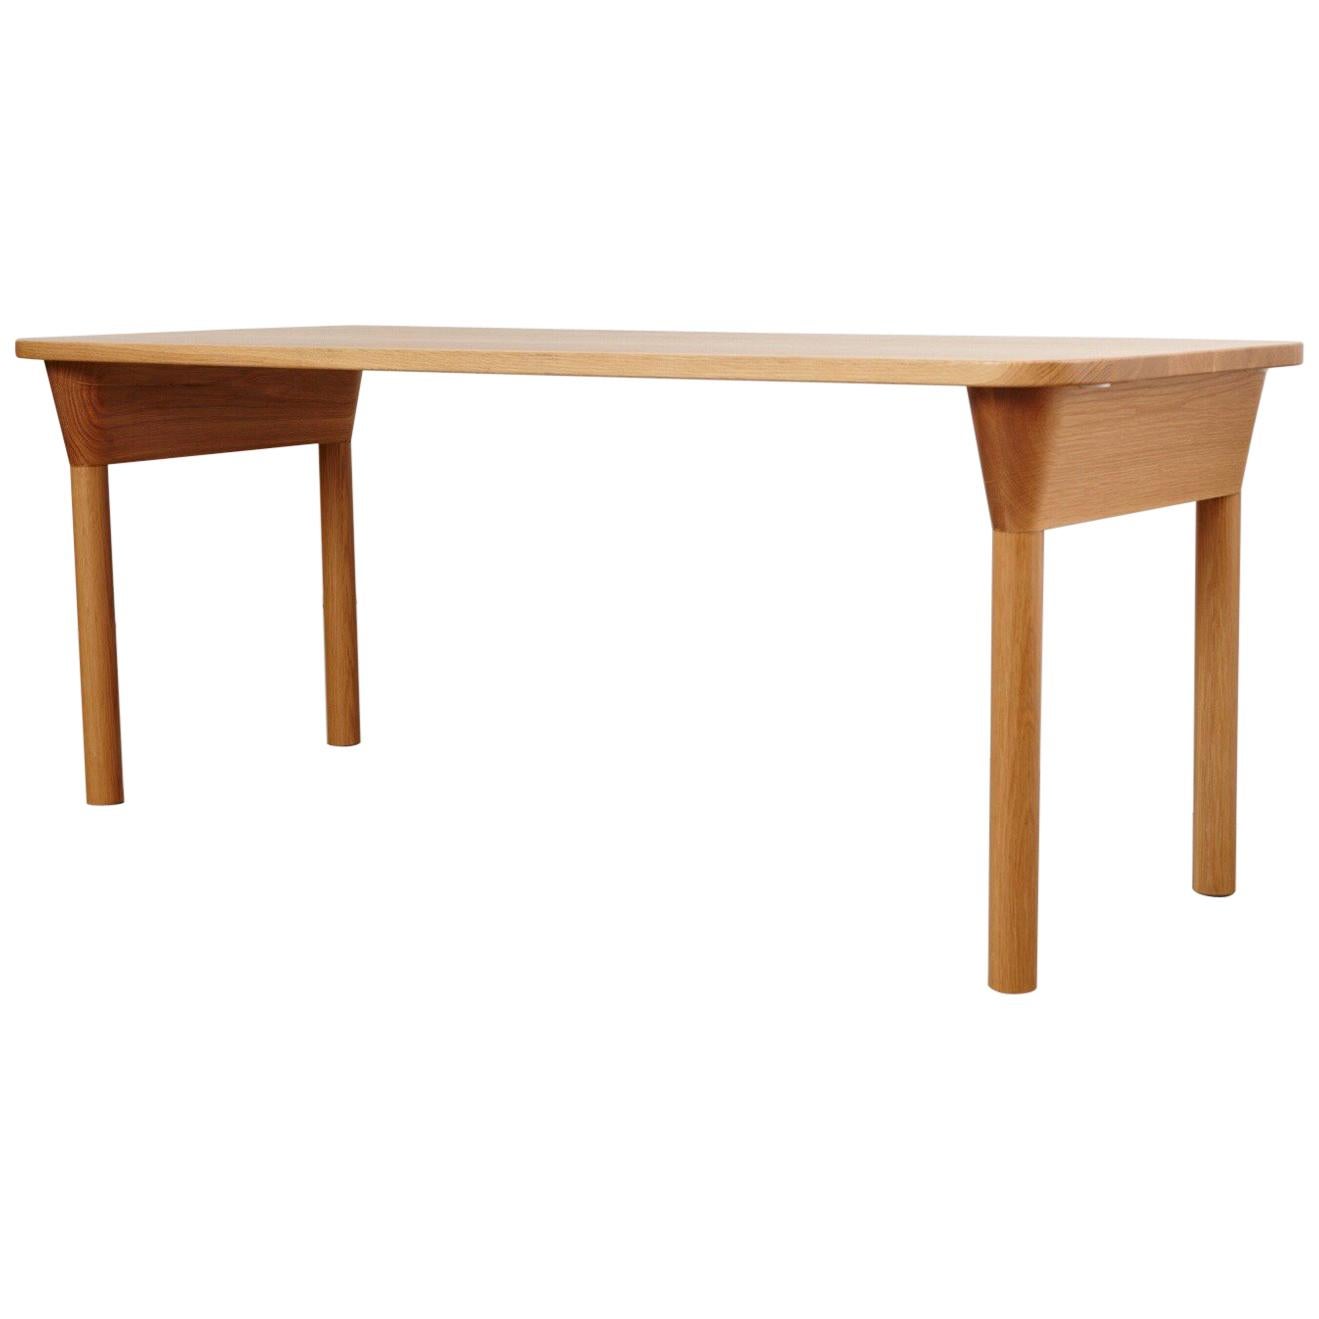 “Column Table” Minimalist Solid Wood Oak Dining Table or Desk